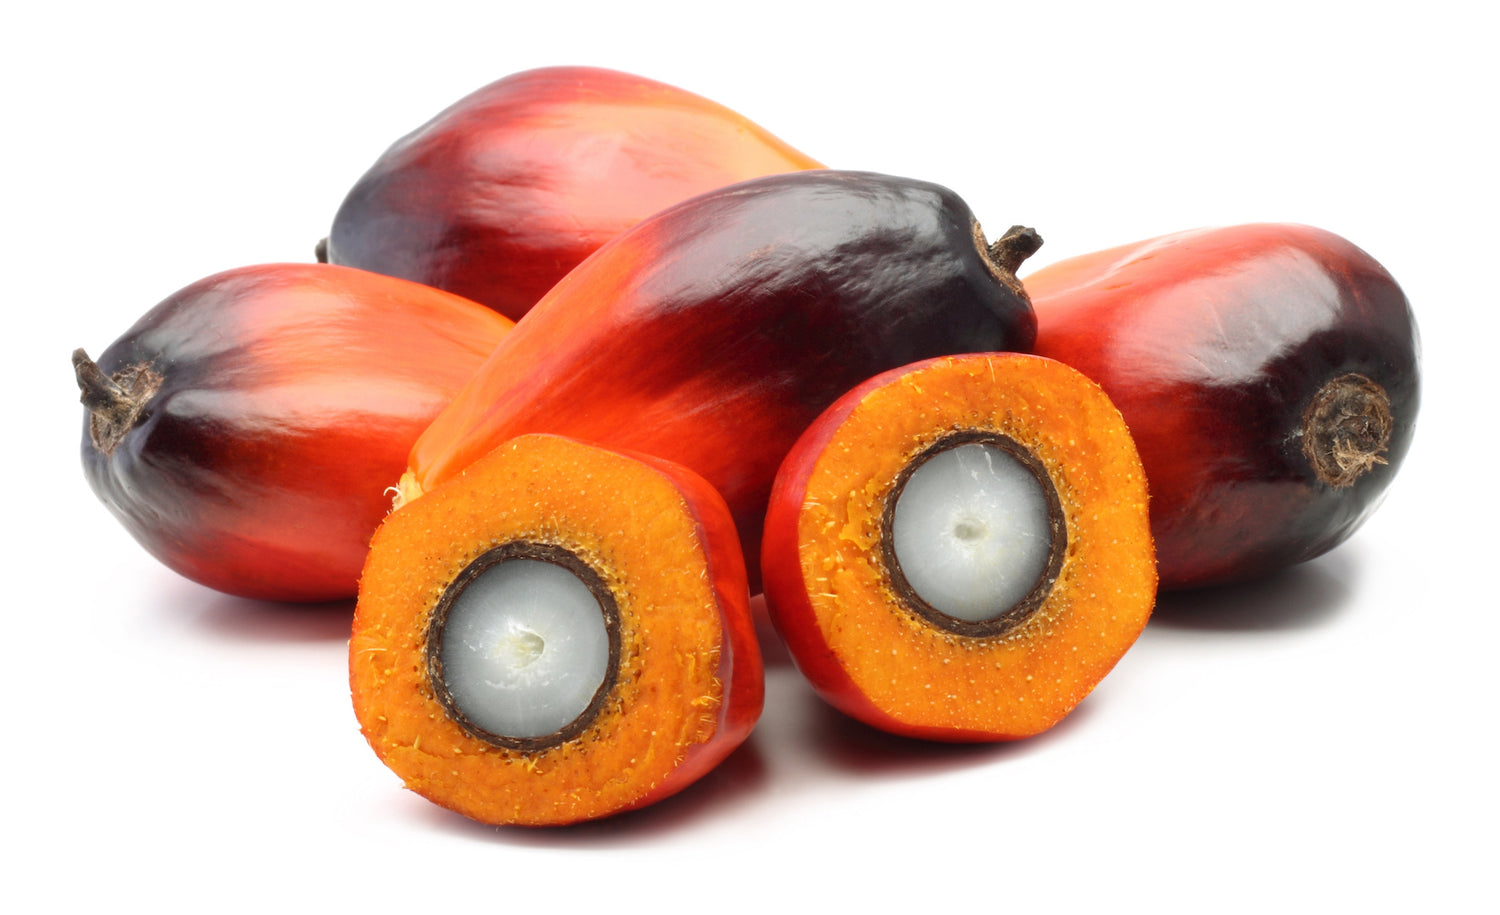 Azure Market Organics Palm Fruit Shortening, Organic